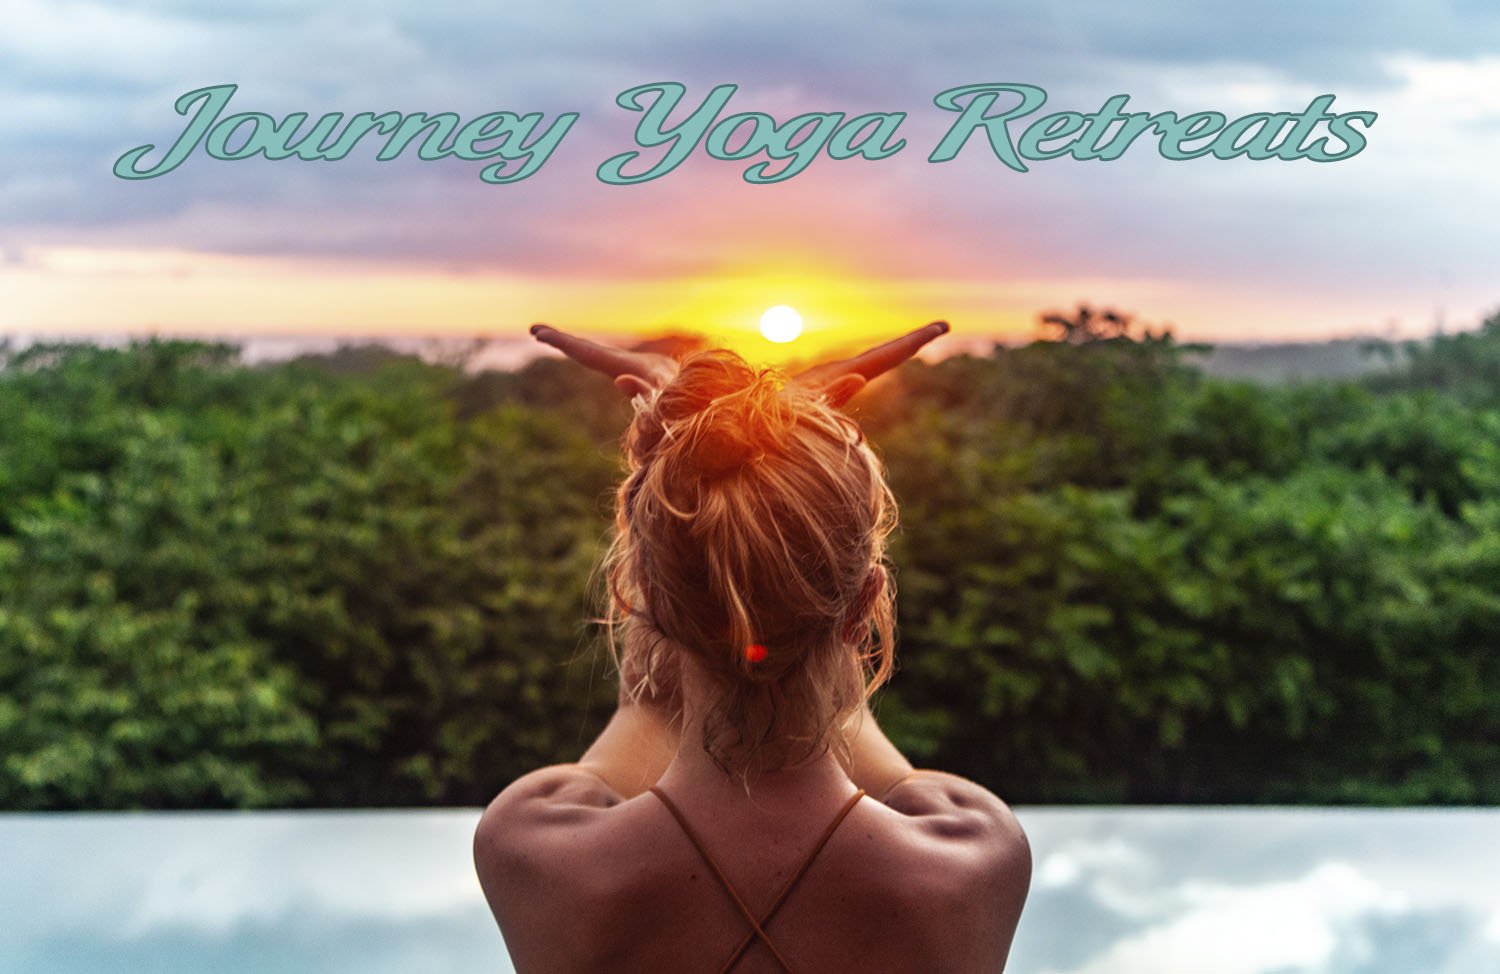 journey yoga and wellness